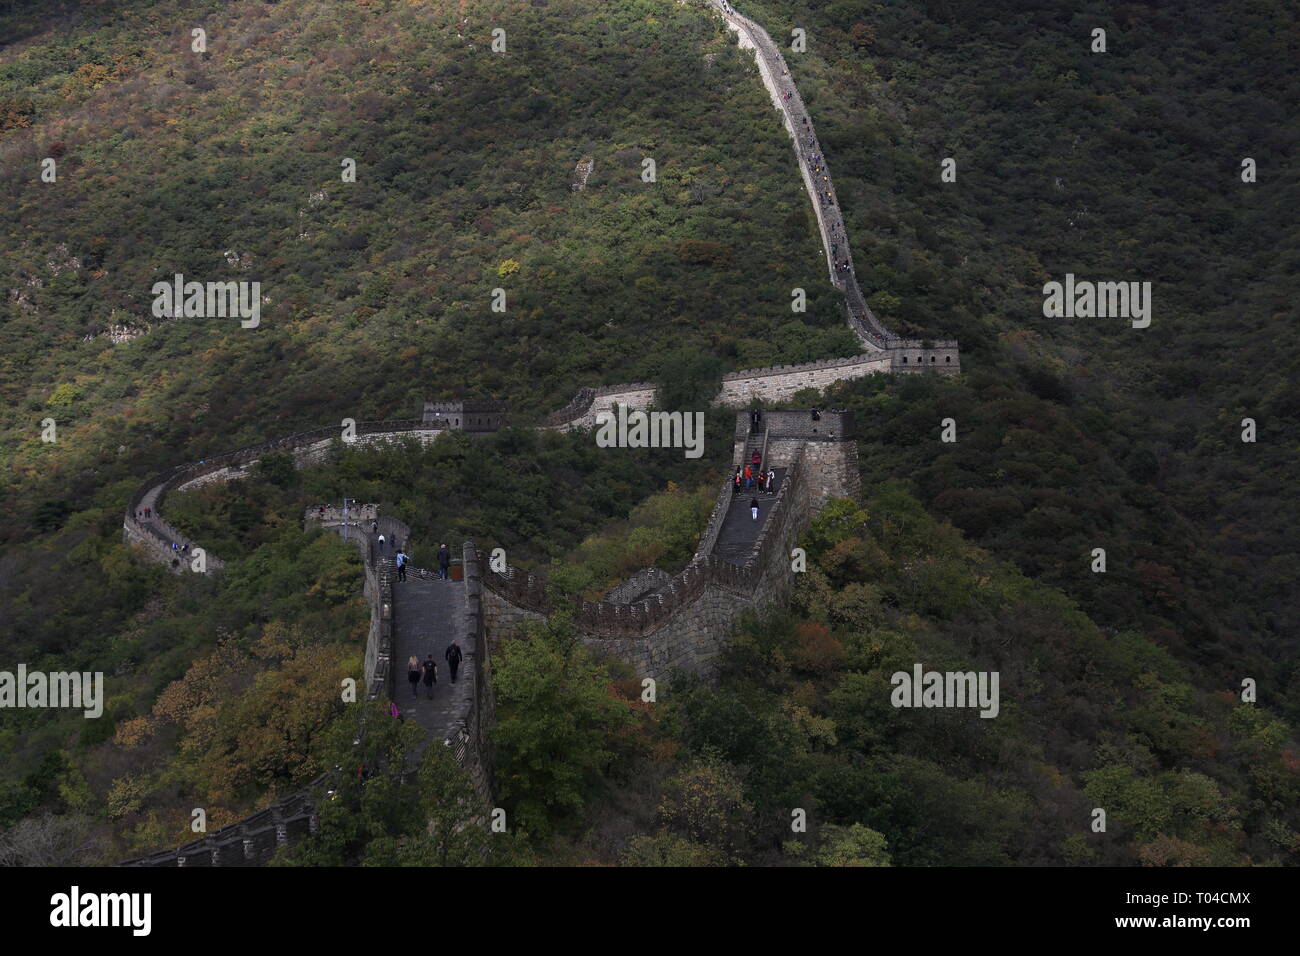 The Great Wall & surrounding mountains at Mutianyu, Beijing, China Stock Photo